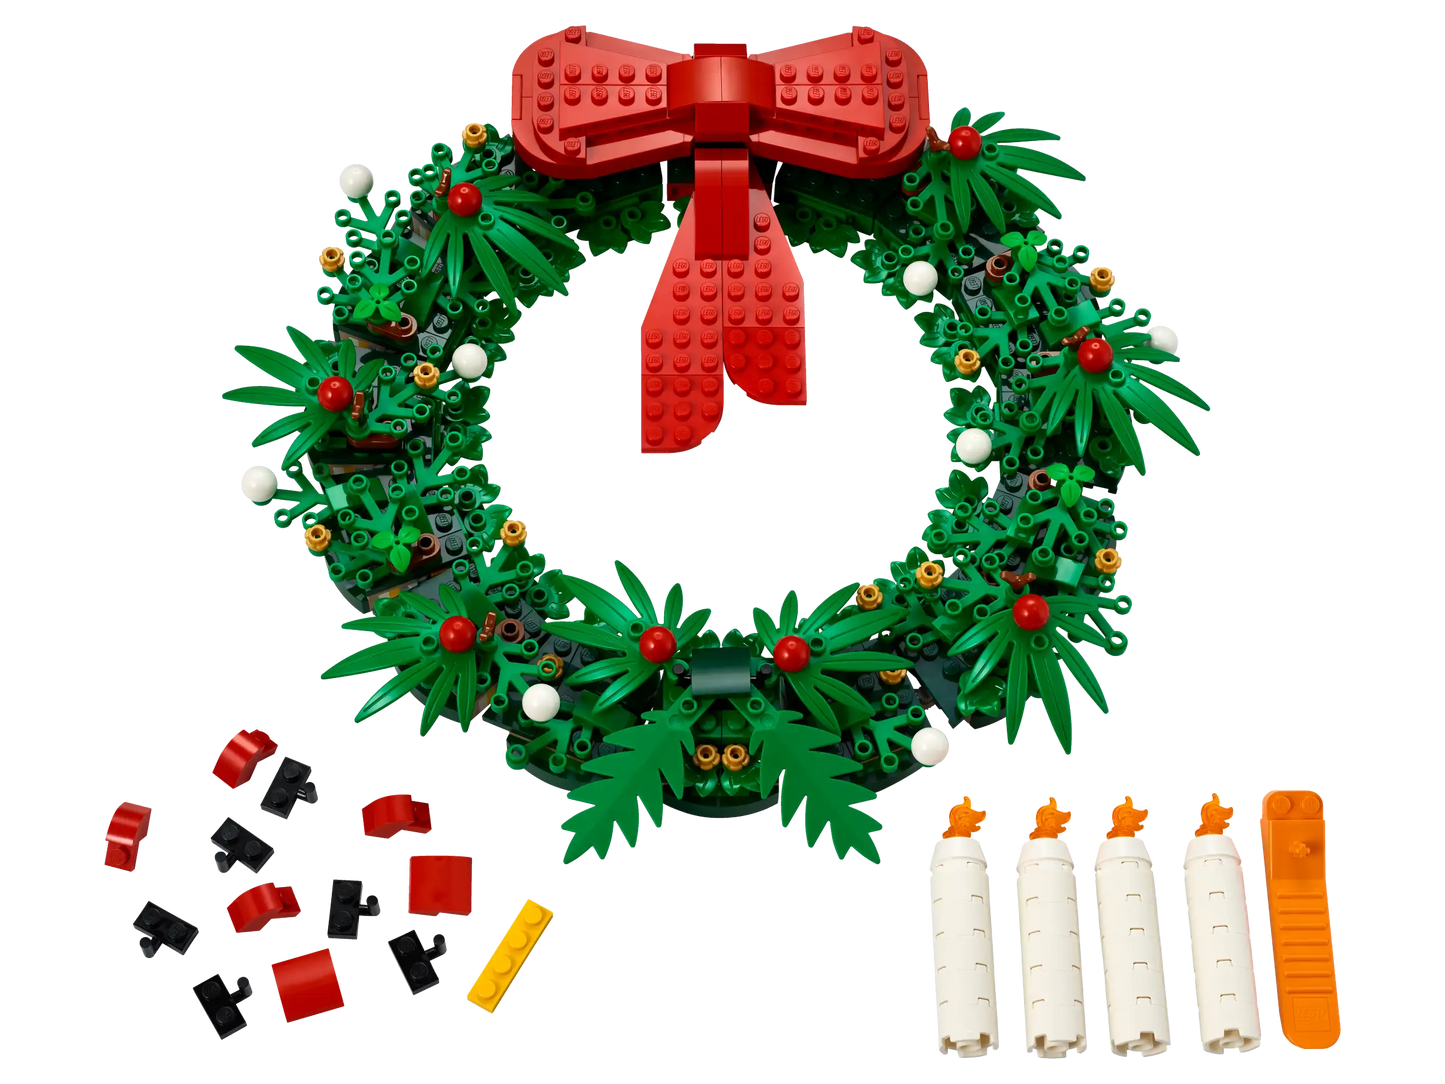 LEGO Iconic 2-in-1-Adventskranz (40426)